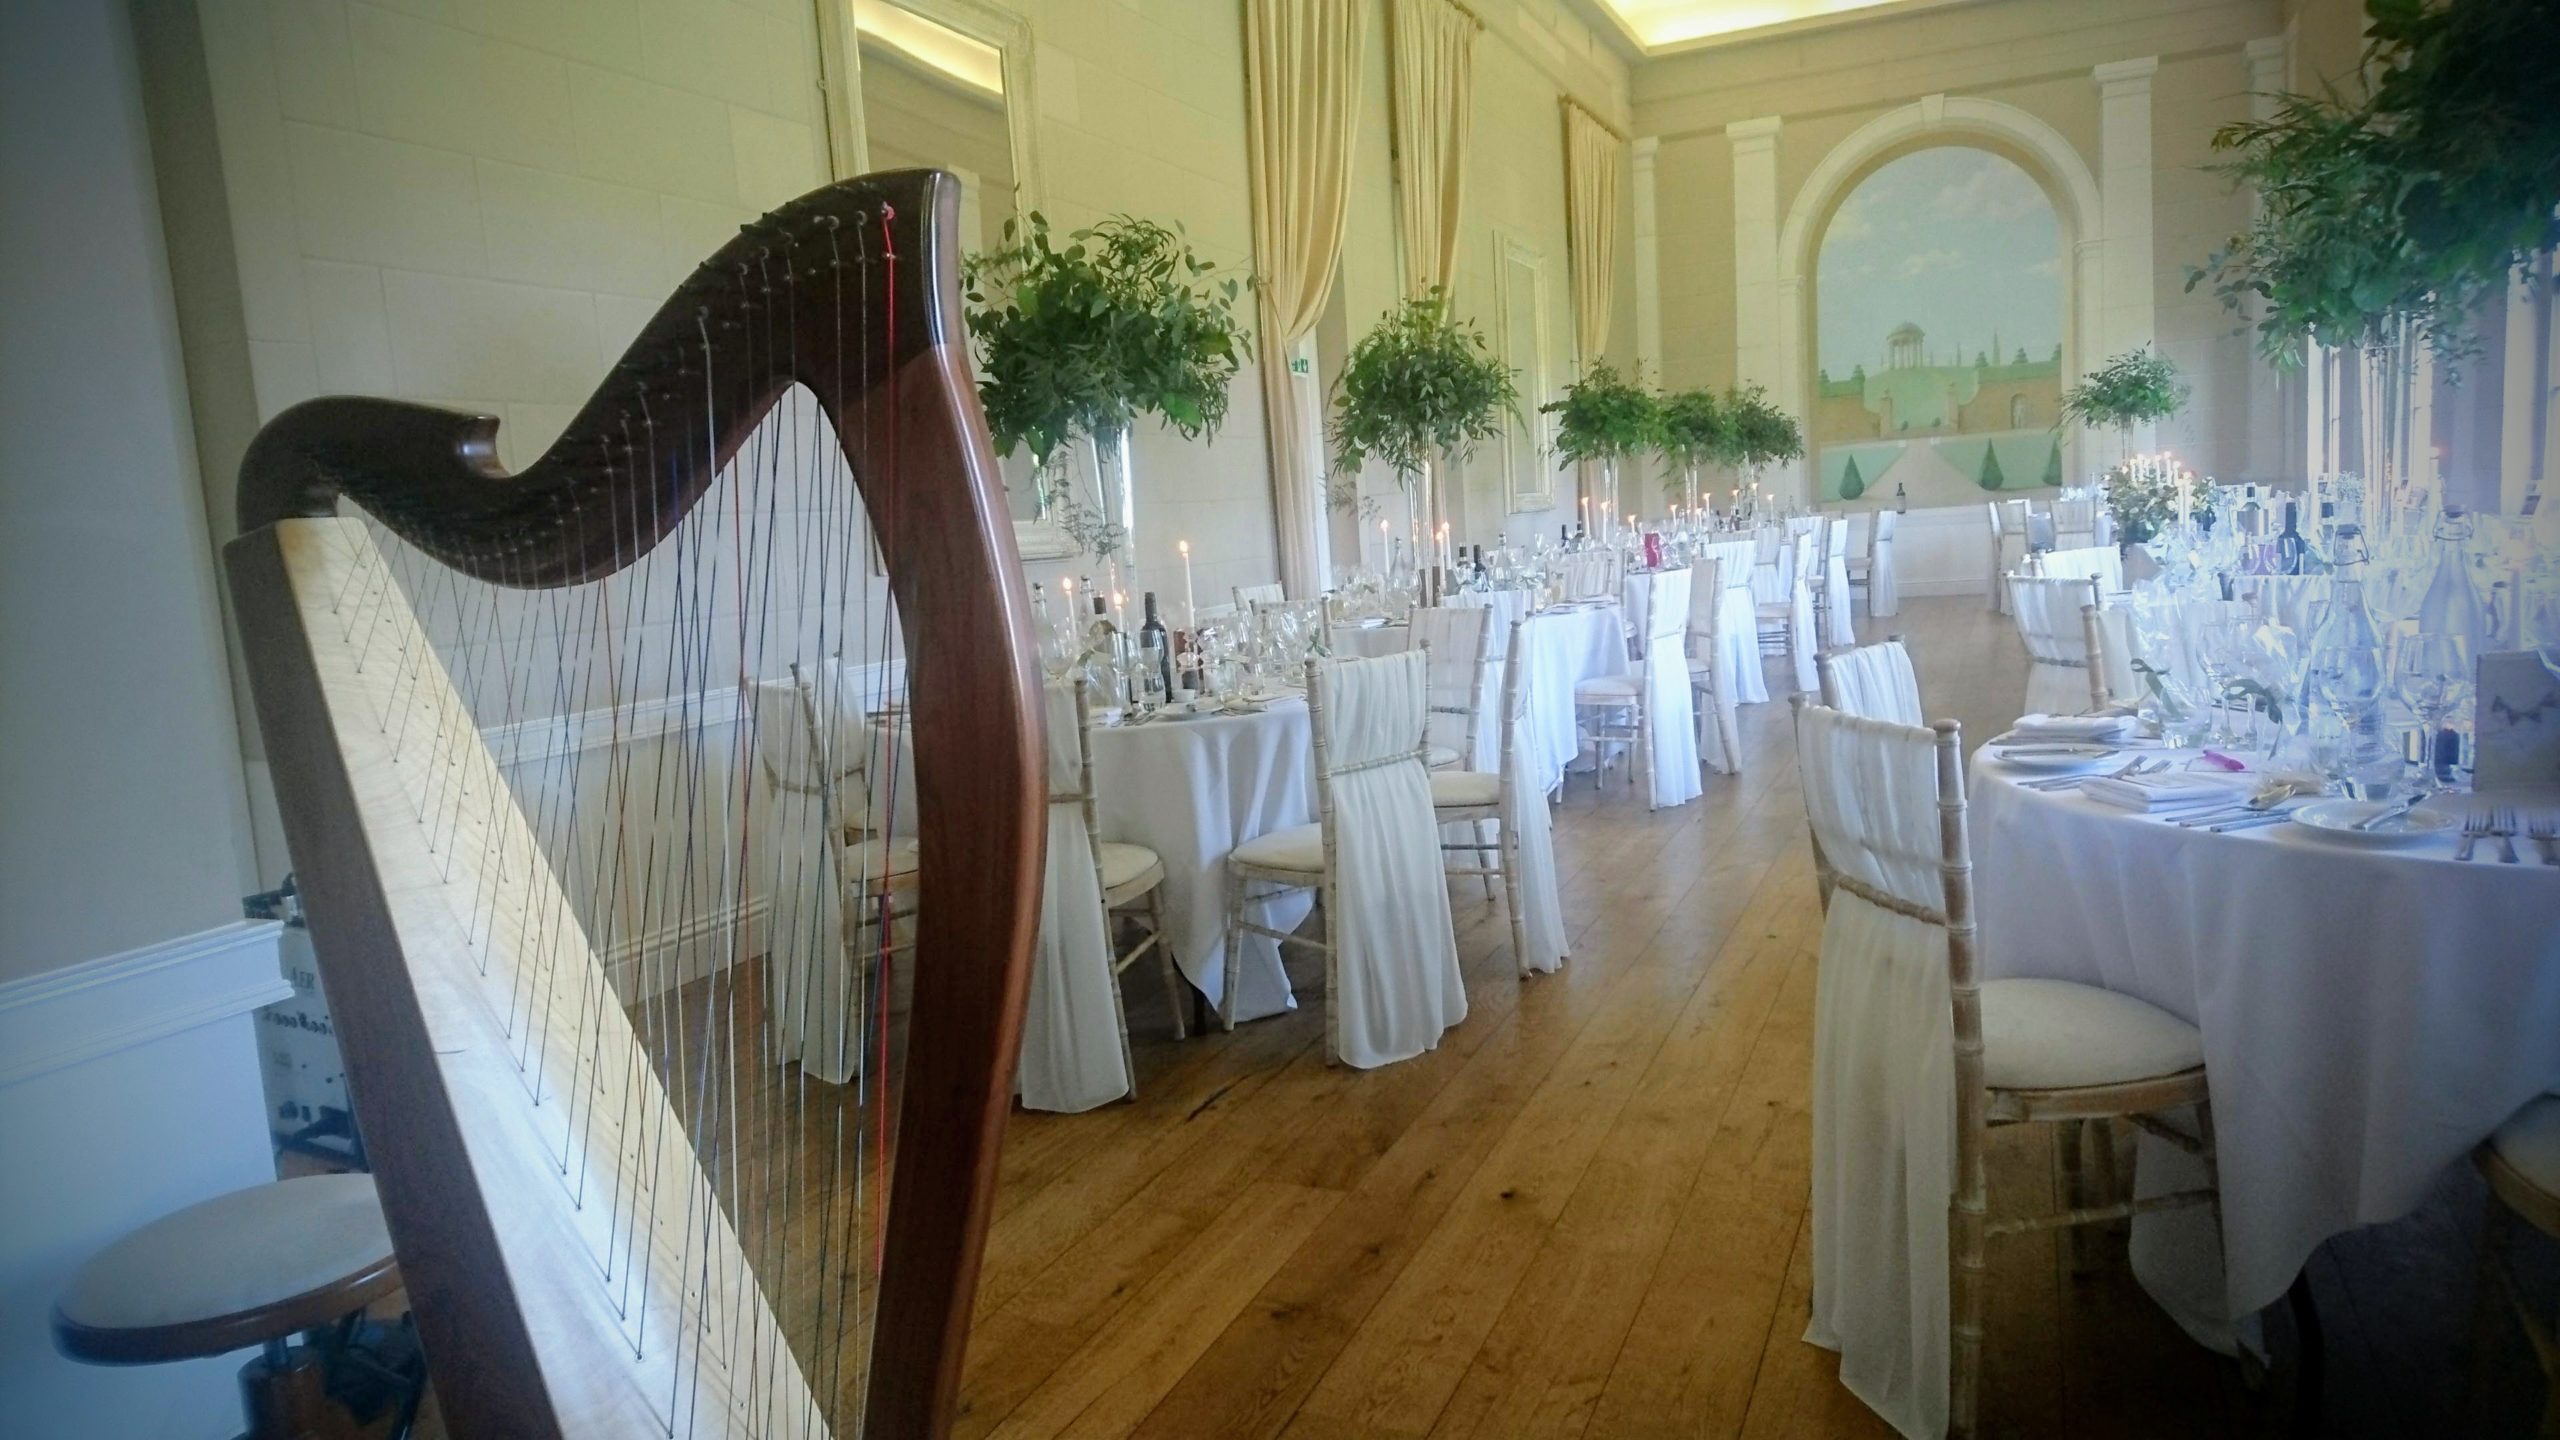 harp at wedding breakfast